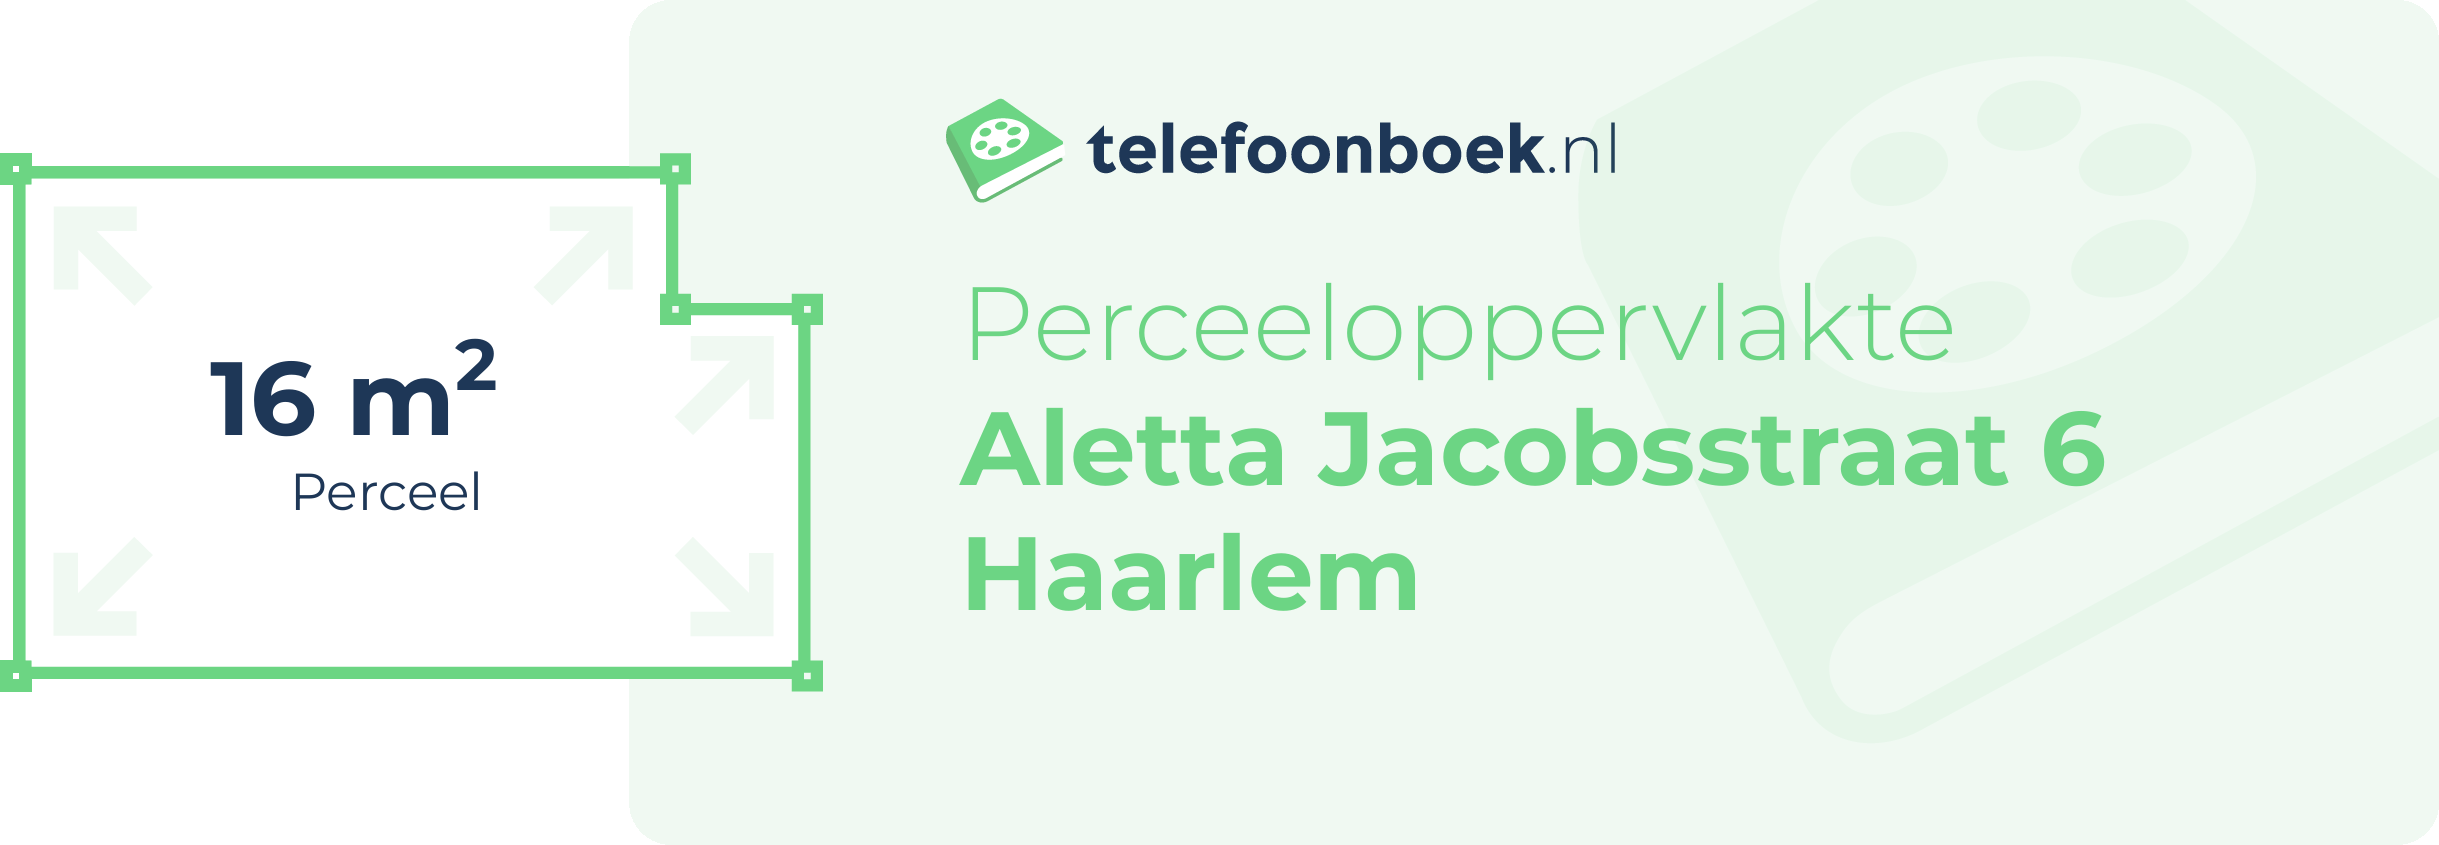 Perceeloppervlakte Aletta Jacobsstraat 6 Haarlem